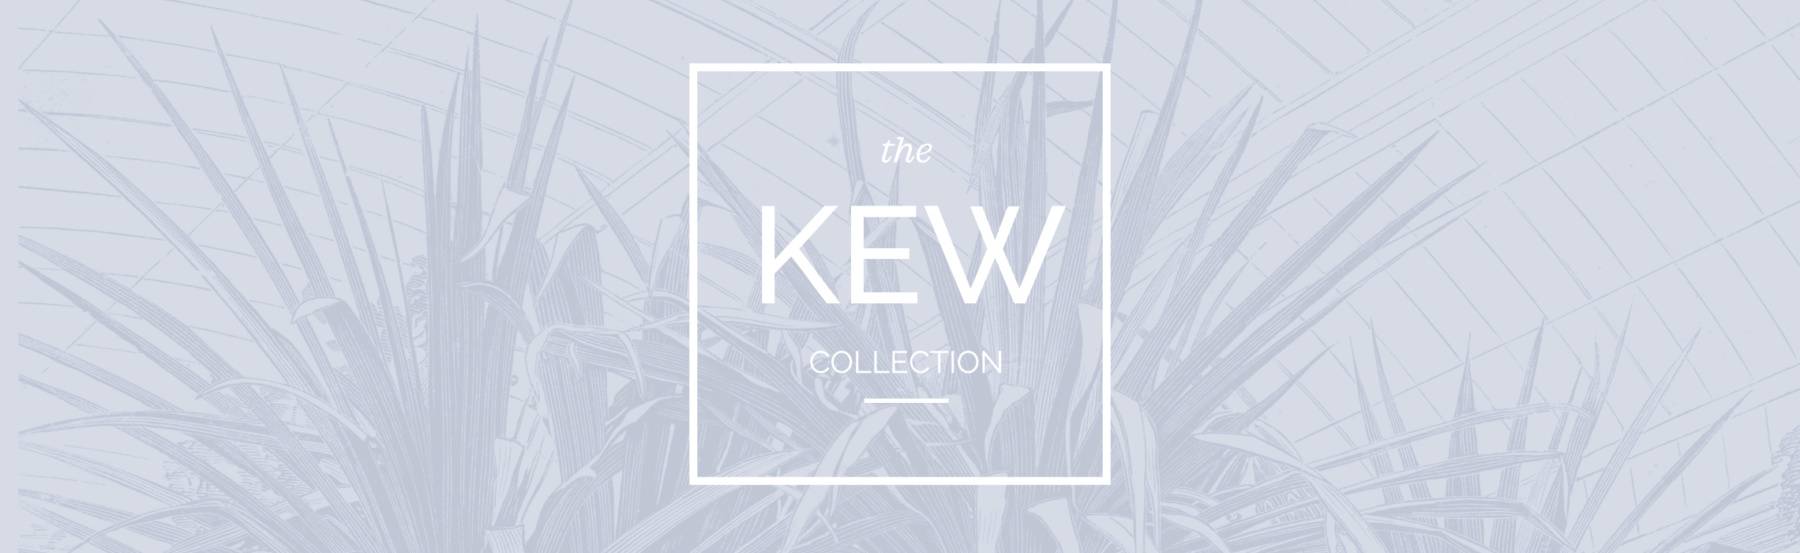 The Kew Collection exclusive to Malvern Garden Buildings